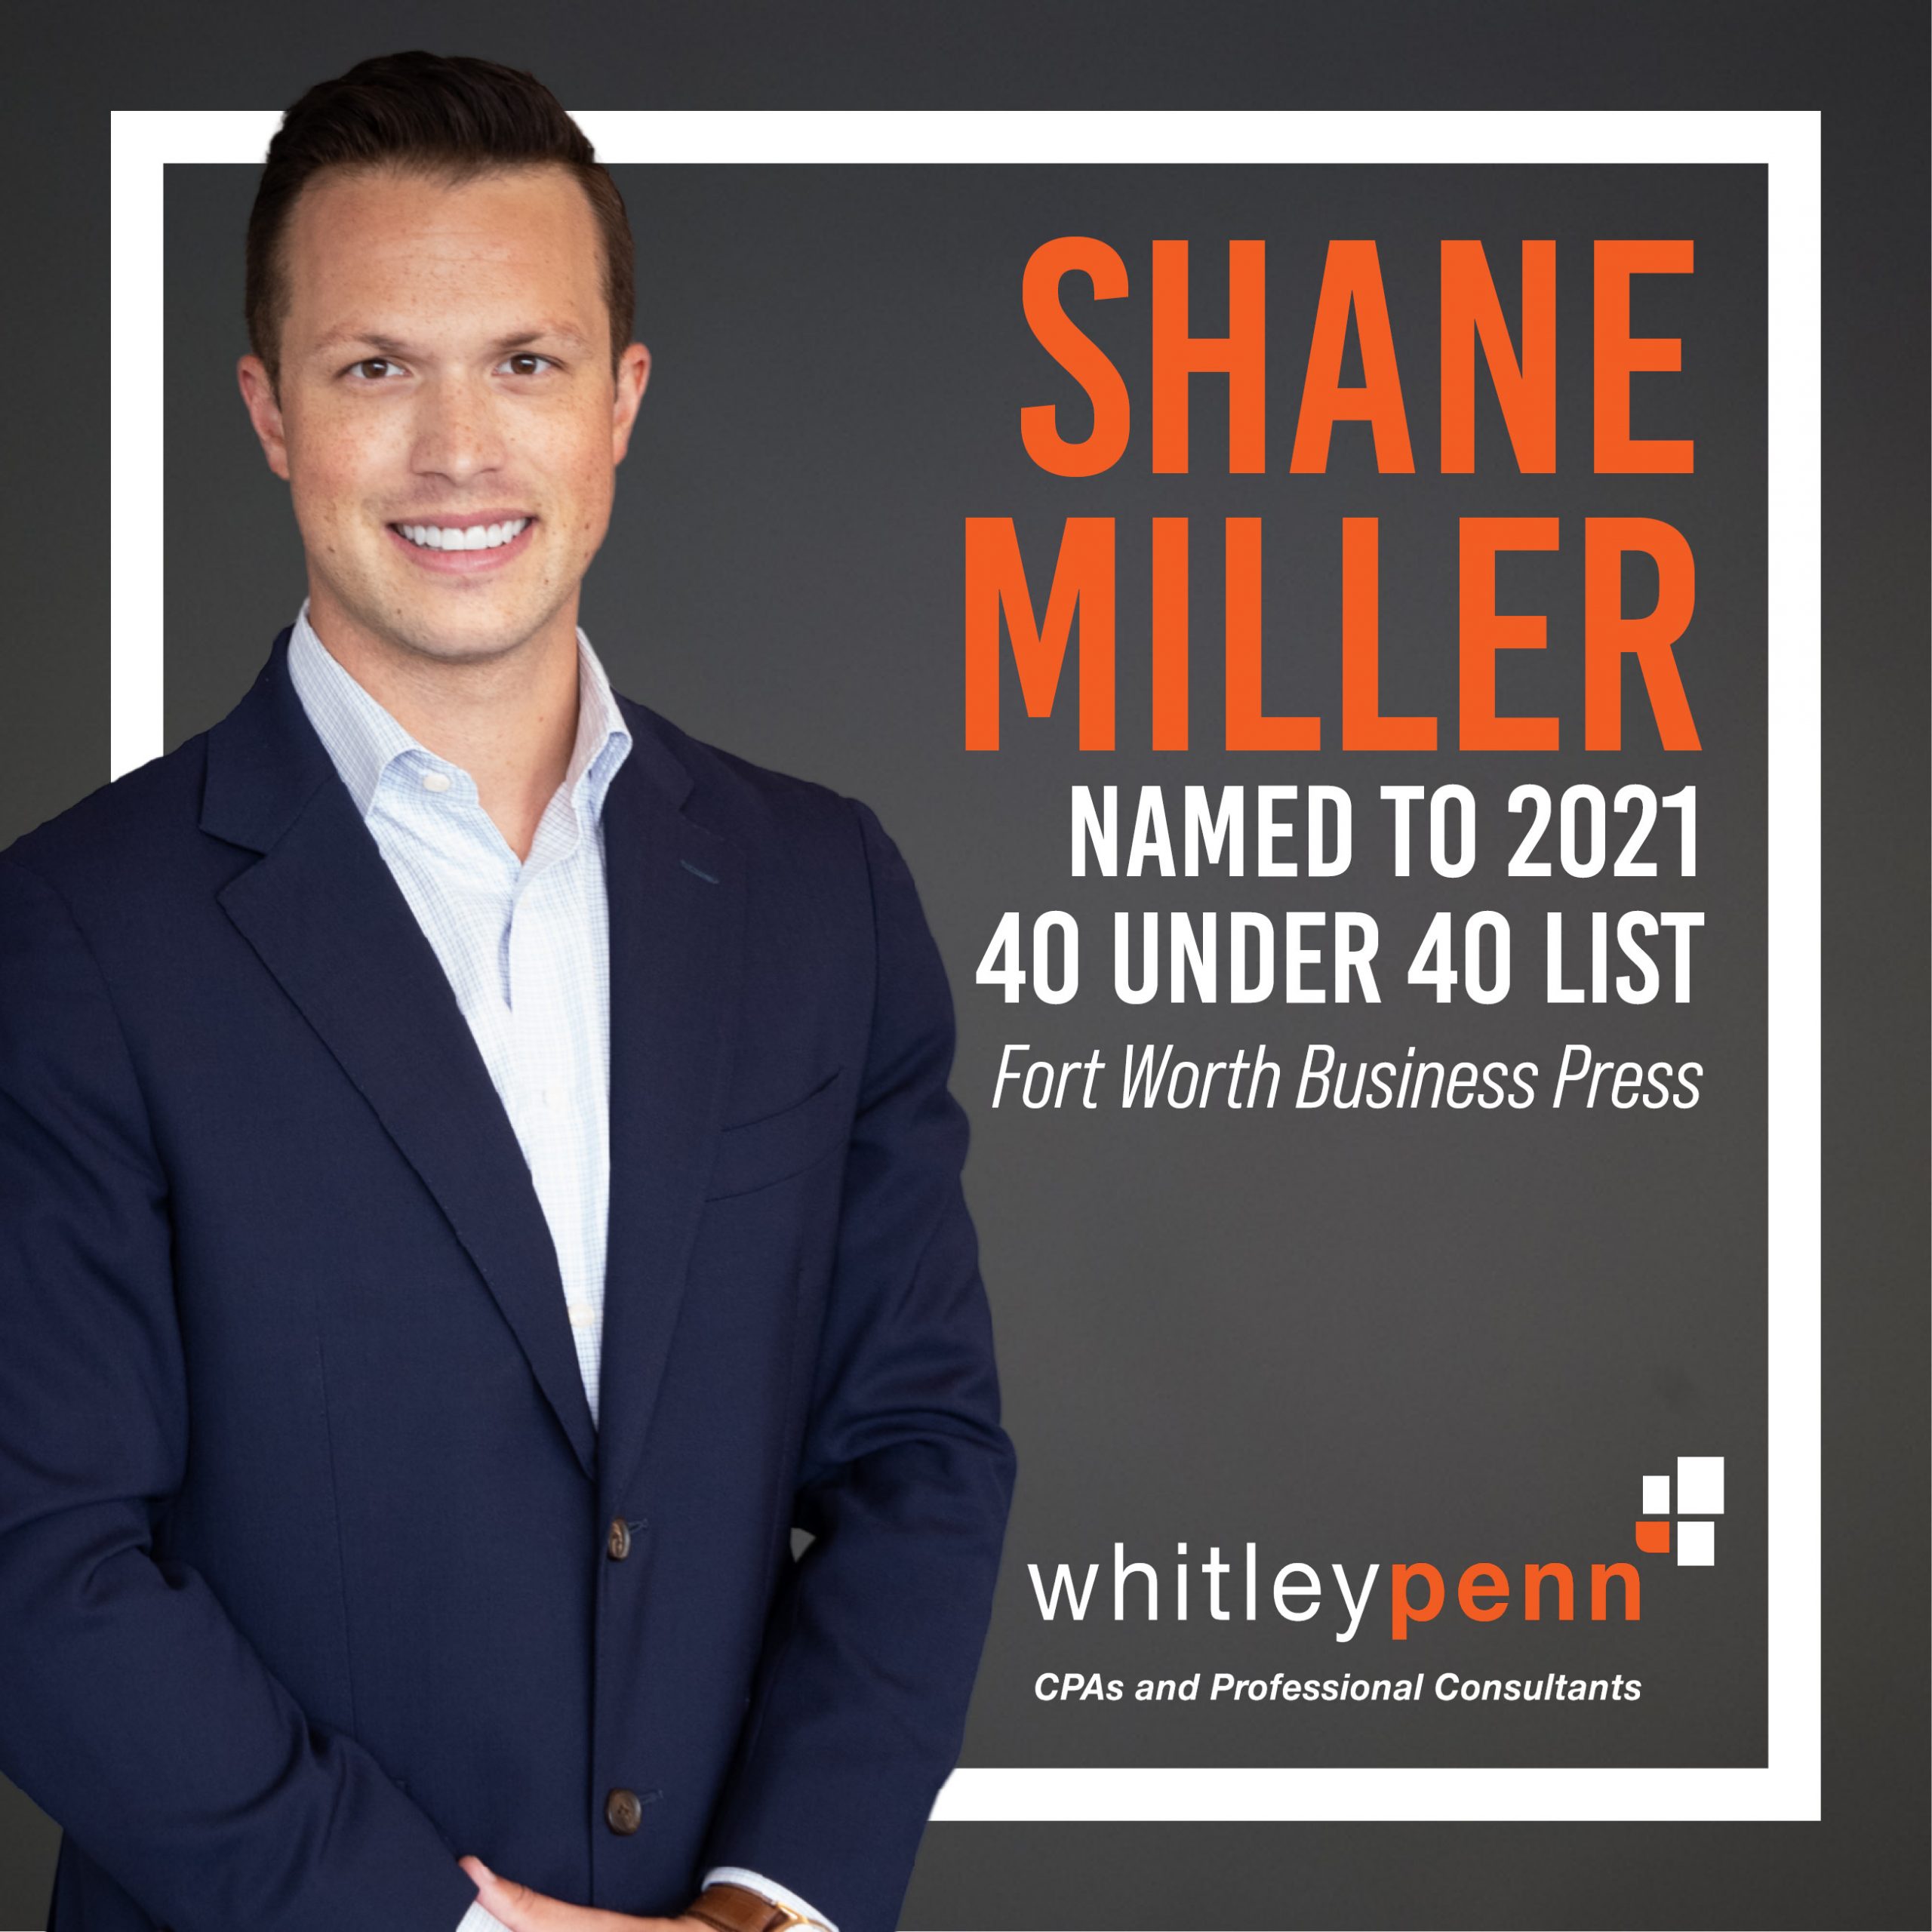 shane miller named to 2021 40 under 40 list